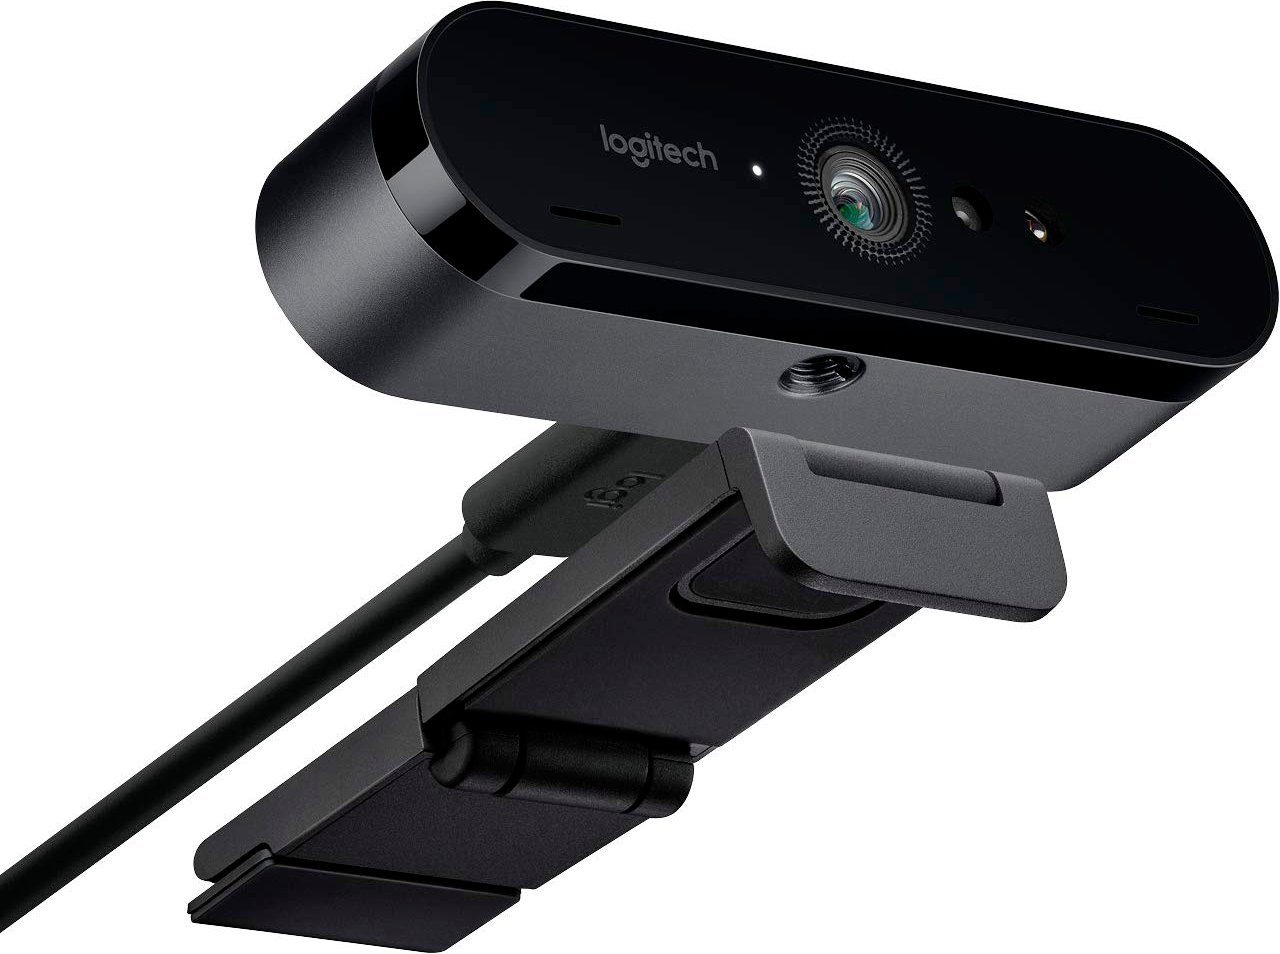 (Infrarot) Logitech EDITION STREAM BRIO Webcam Ultra 4K HD, IrDA (4K